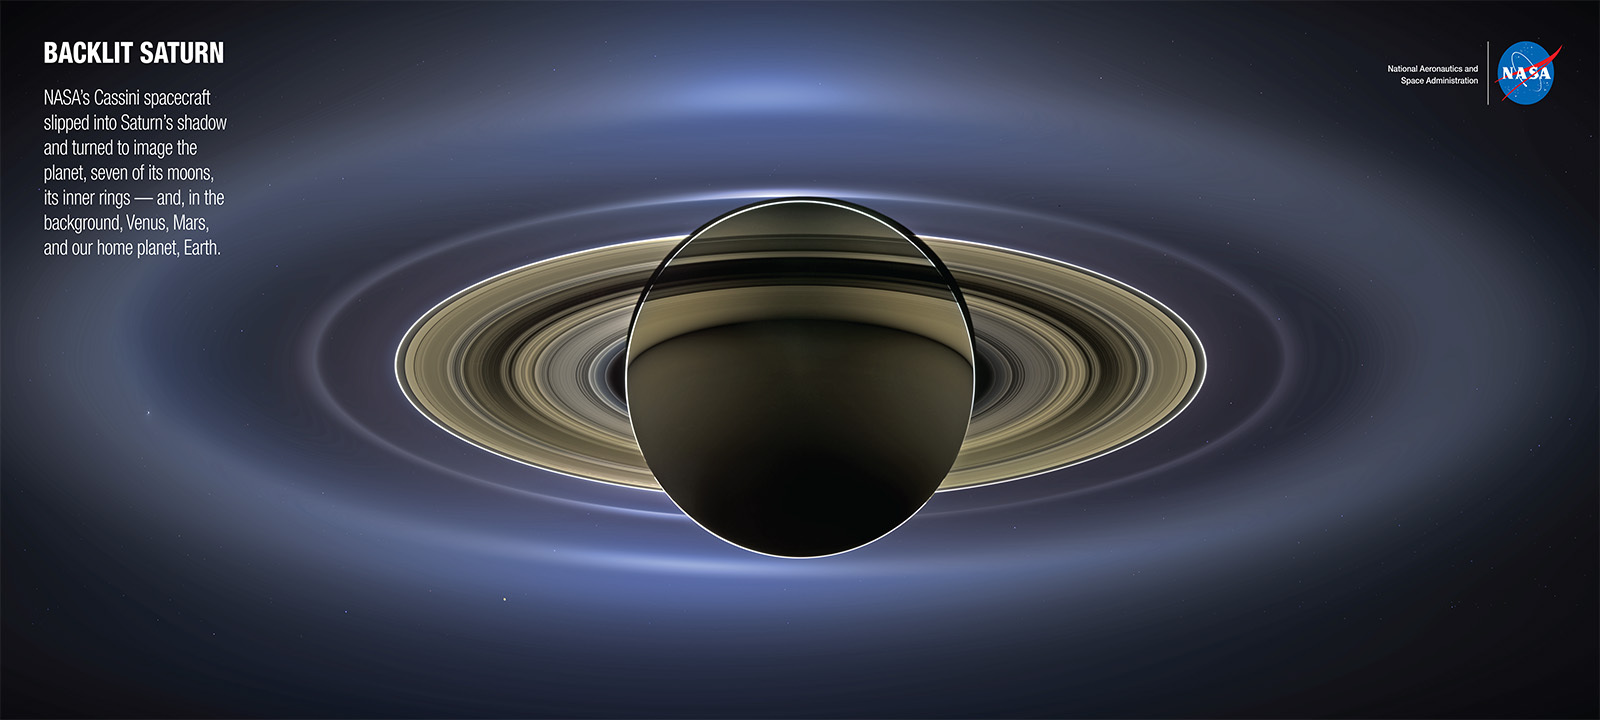 Saturn backdrop